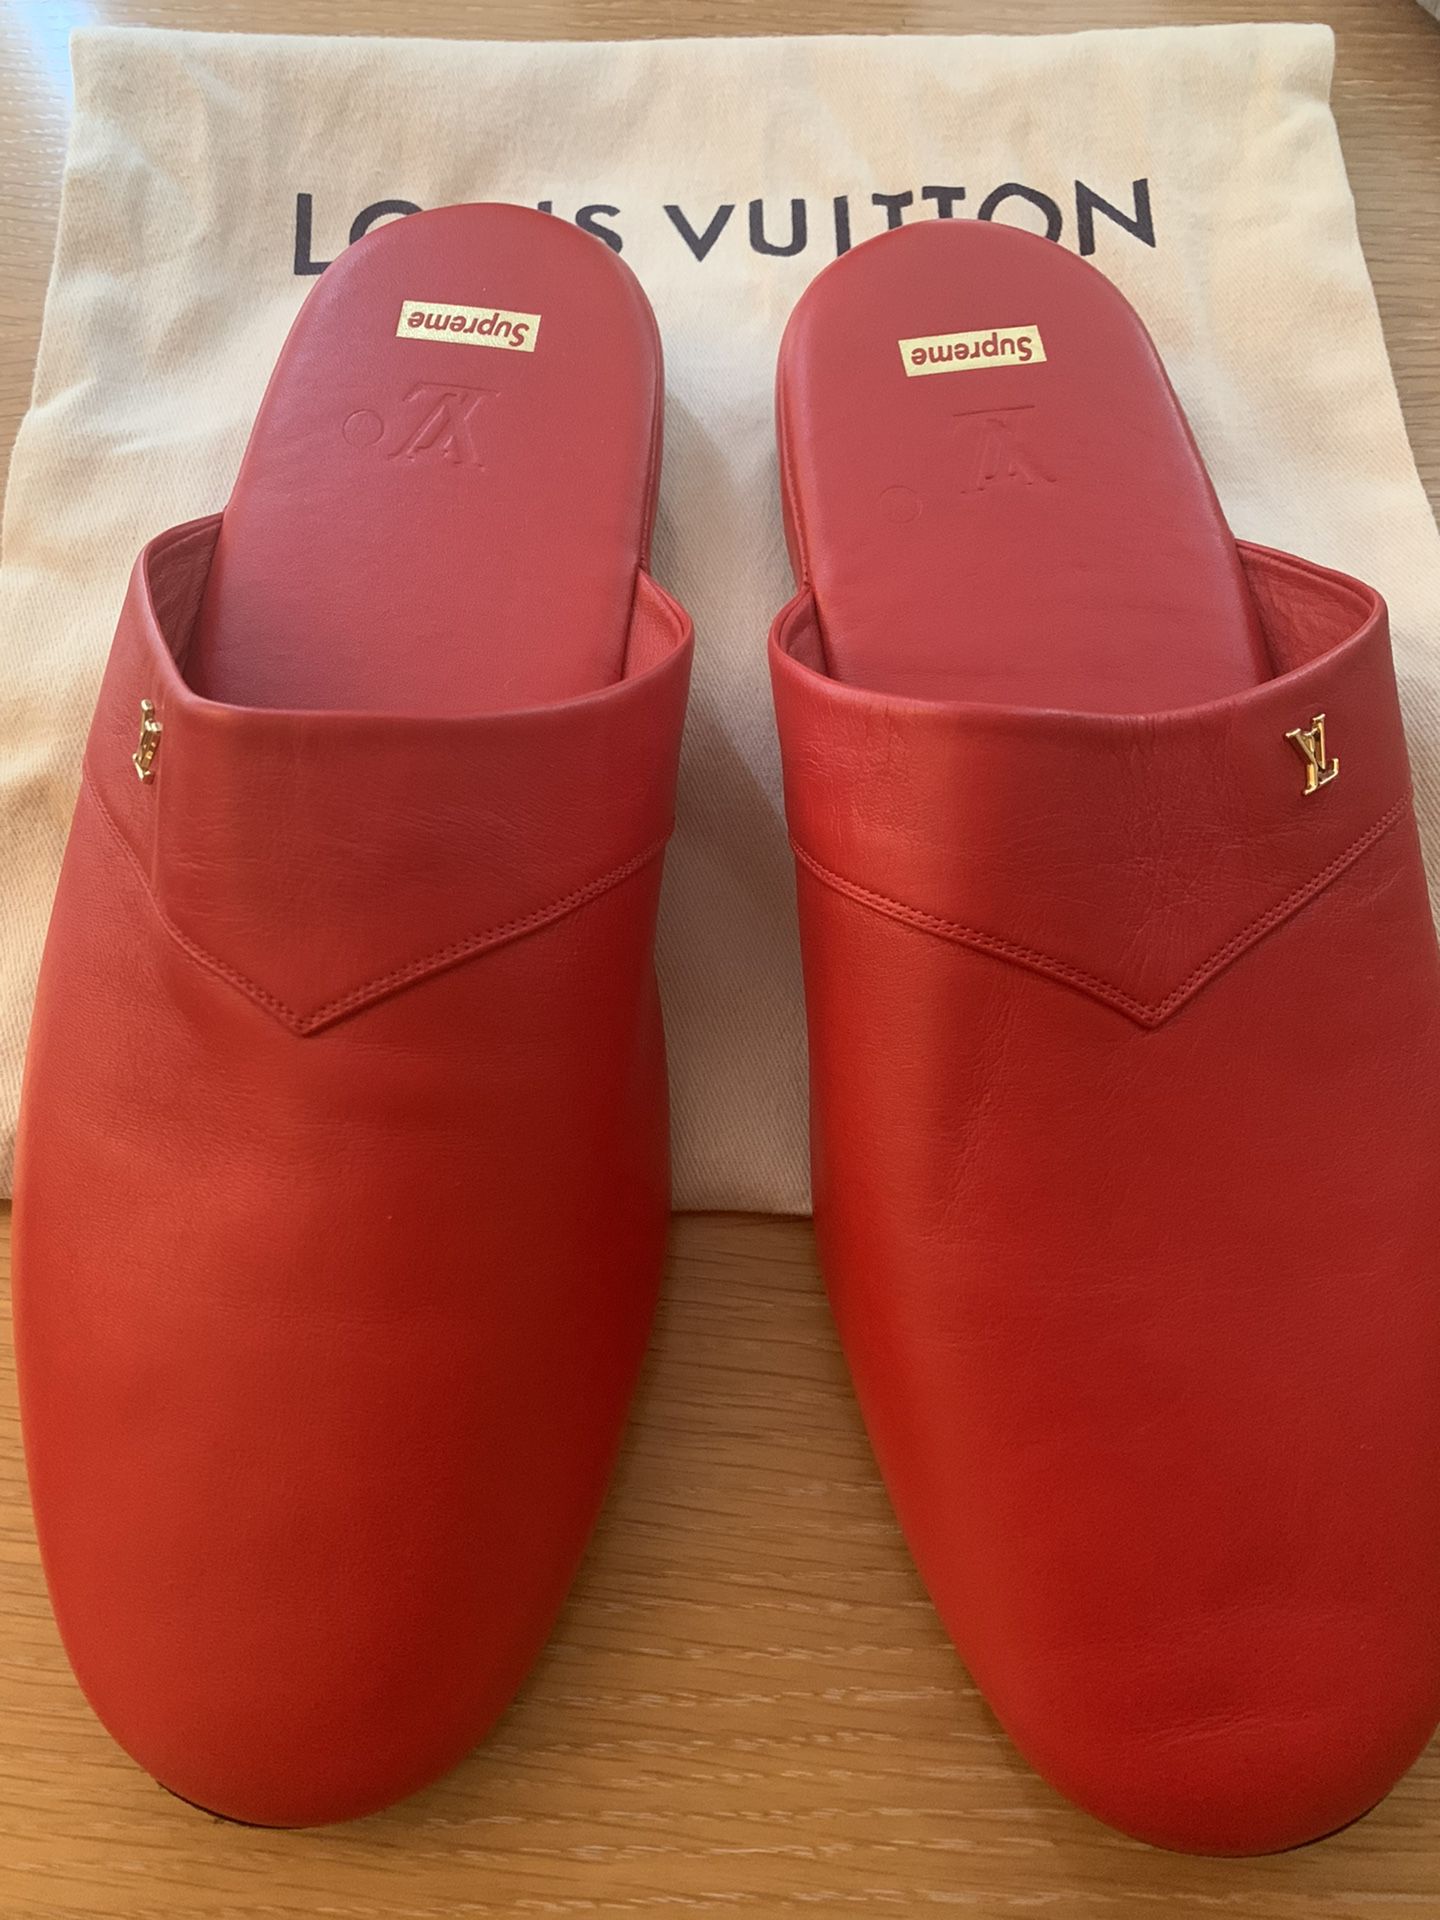 Louis Vuitton X Supreme Slippers - NEW & RARE, Men’s US 8